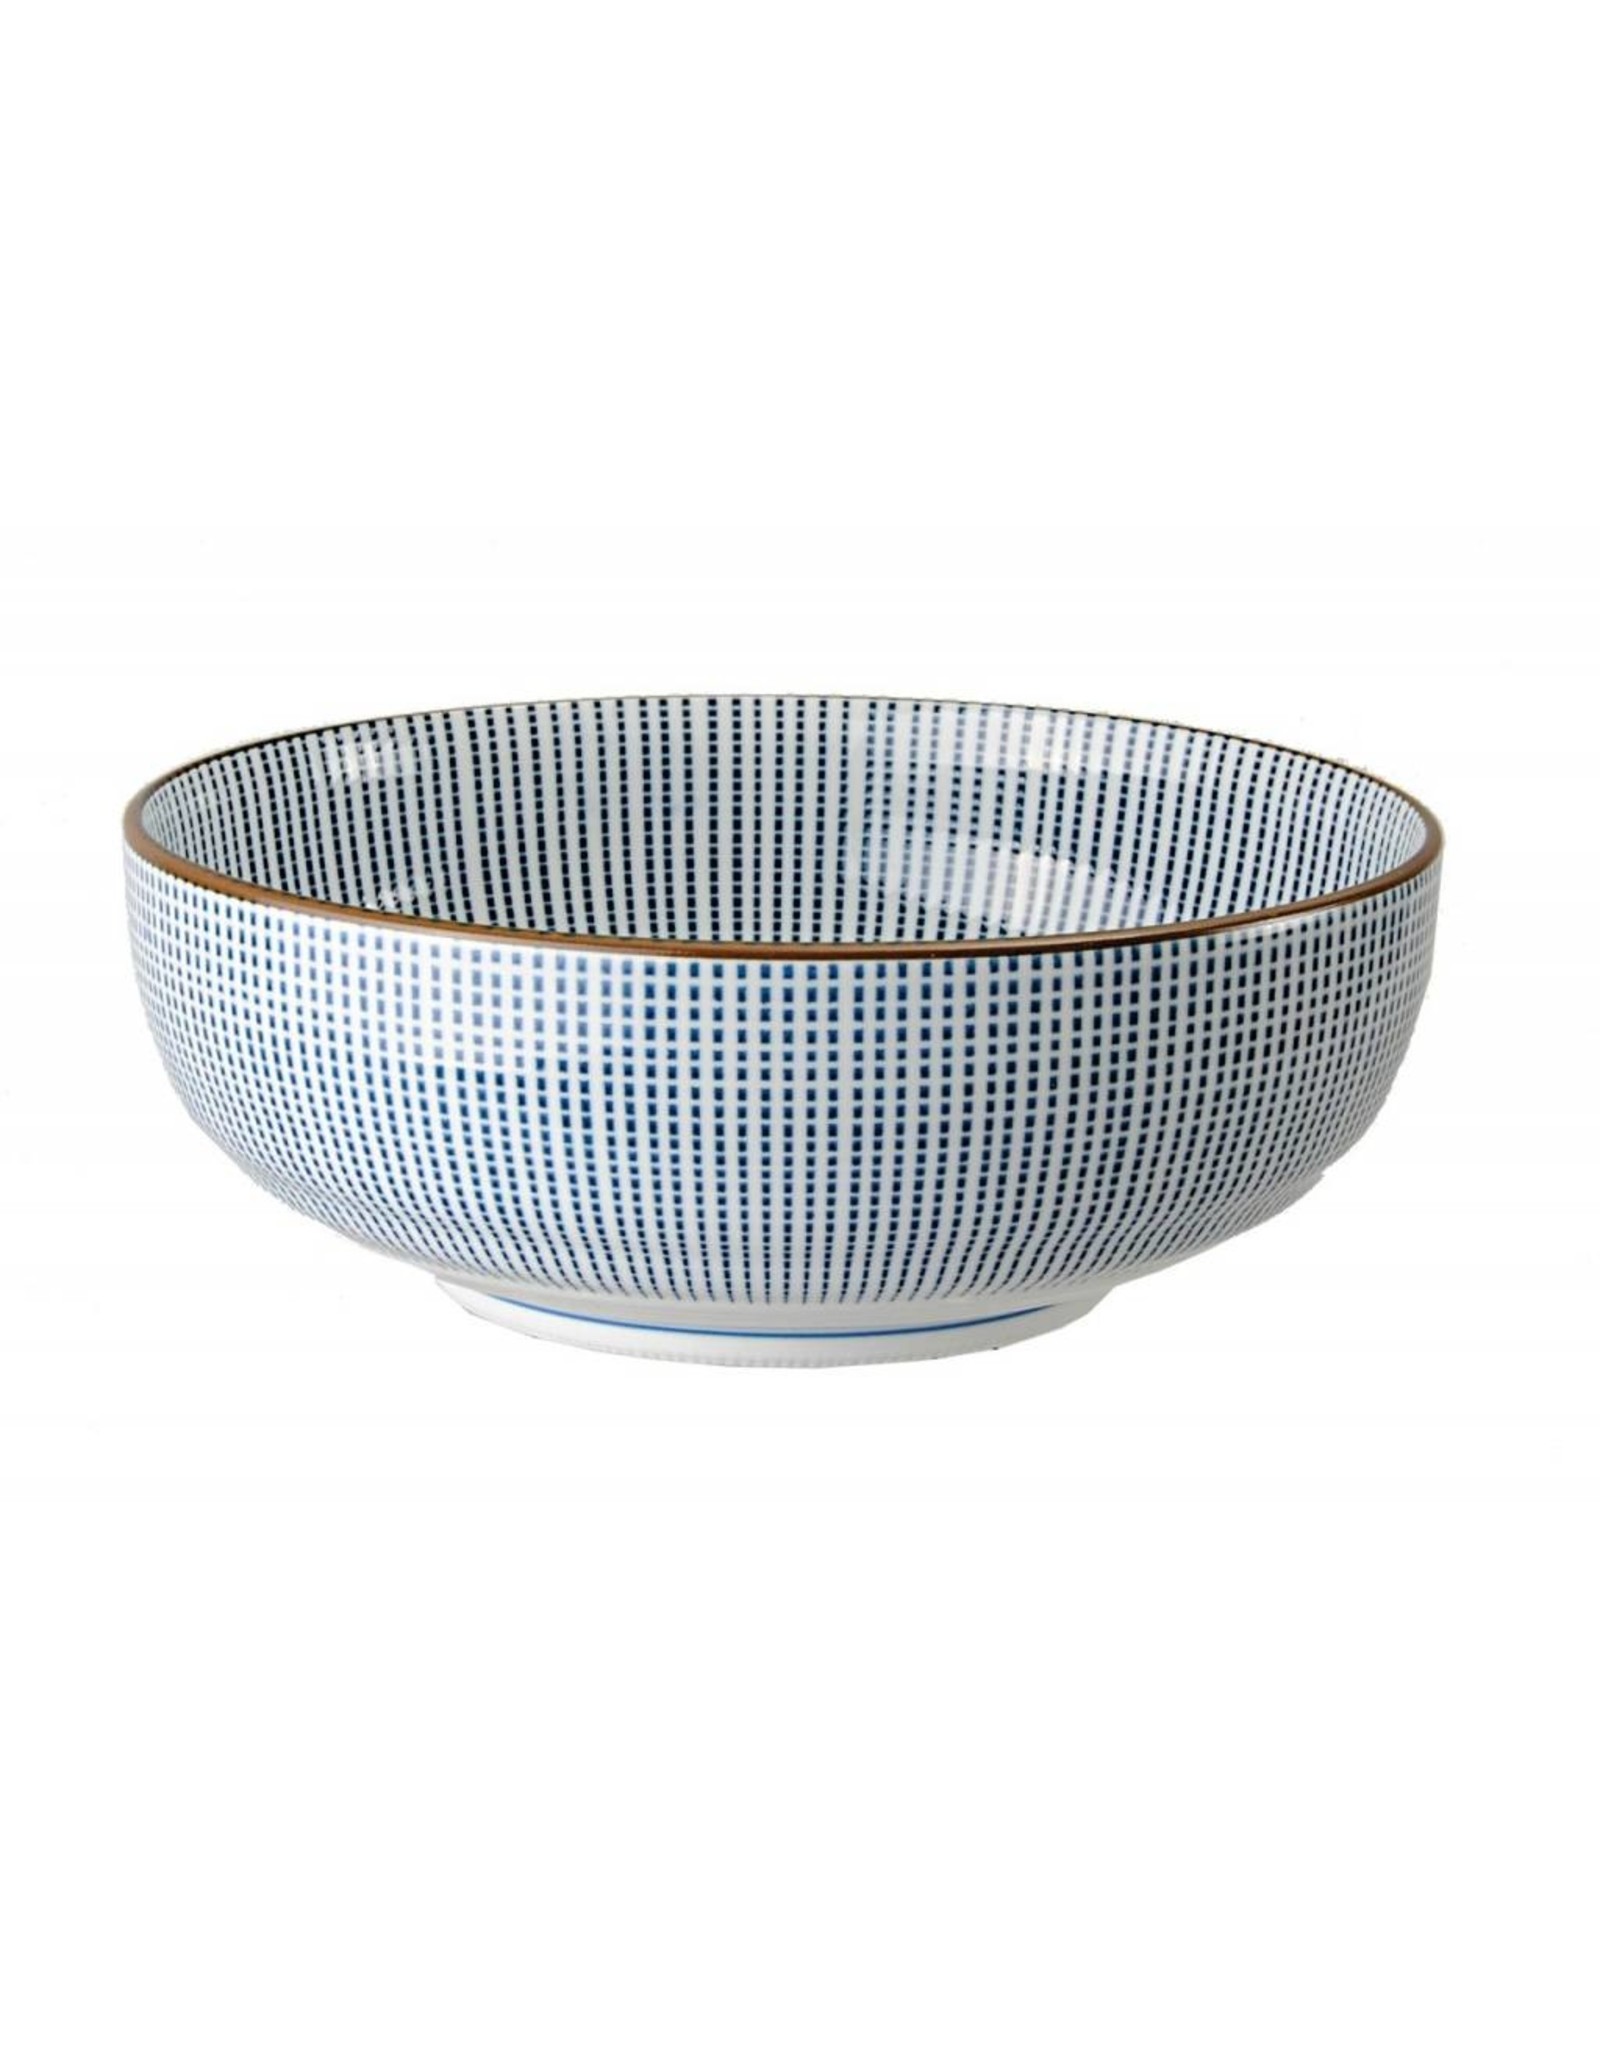 Tokyo Design Studio Sendan Blue Bowl 21.8x8cm 1850ml